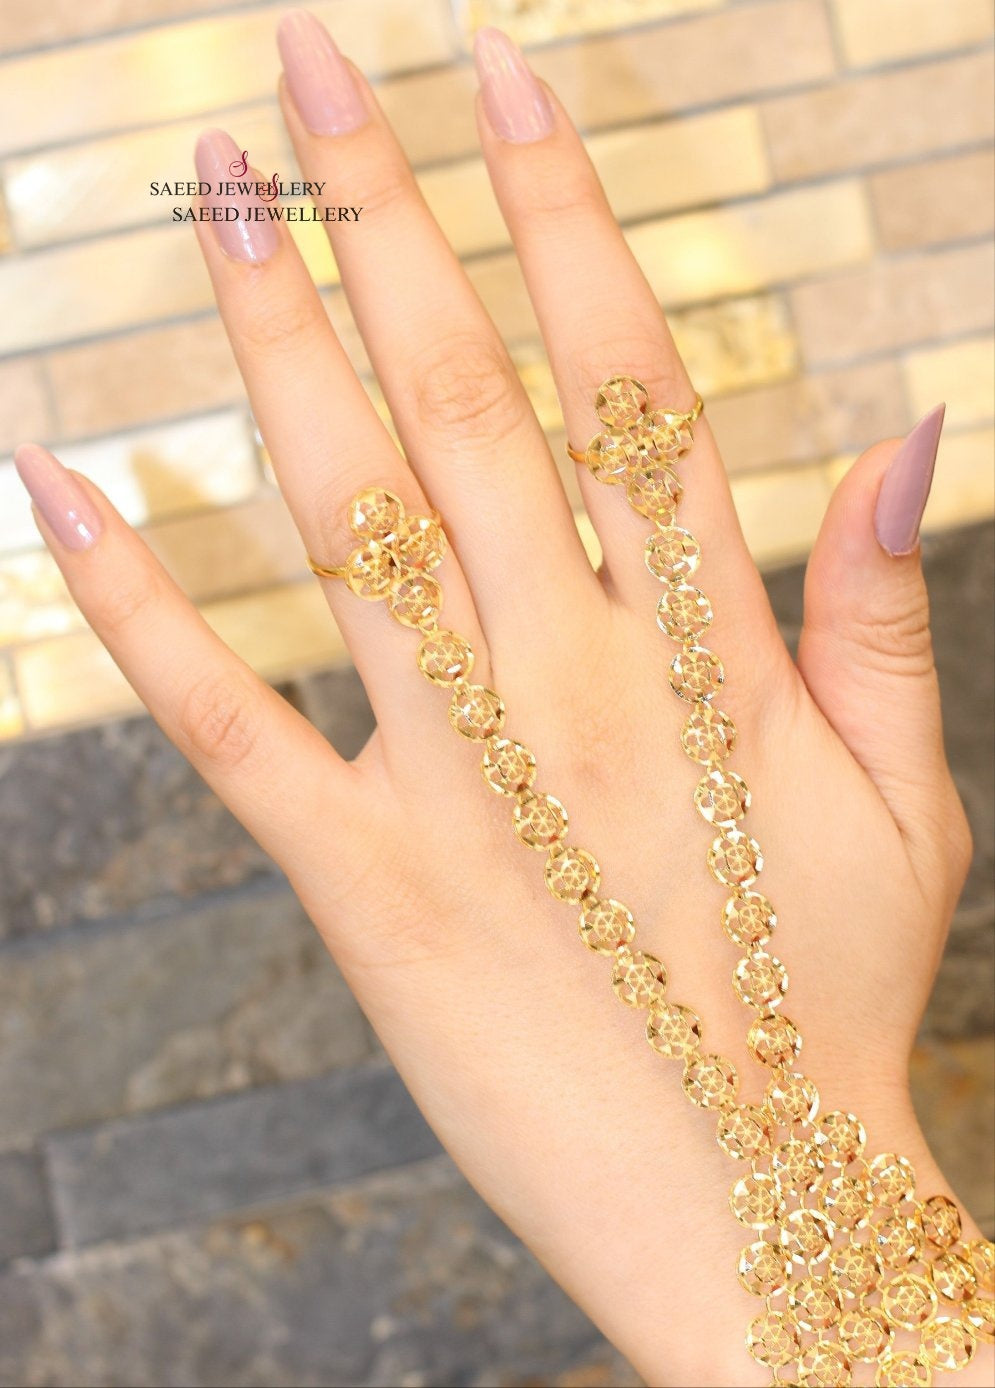 21K Gold Kuwaity Hand Bracelet by Saeed Jewelry - Image 2